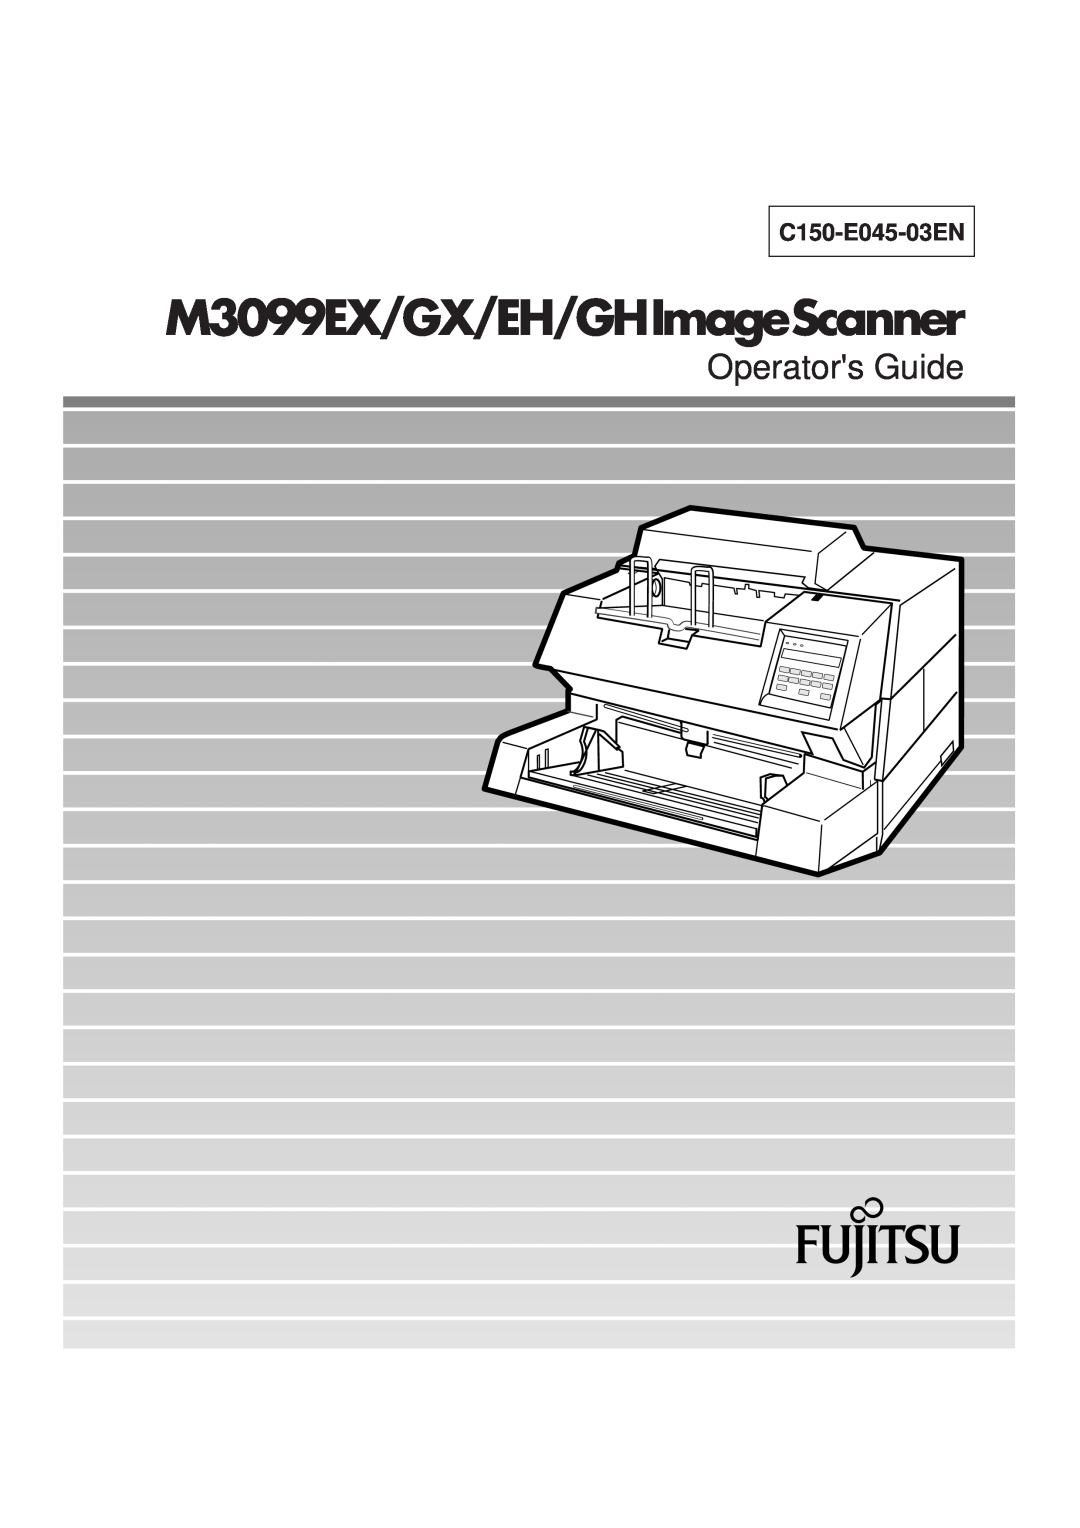 Fujitsu M3099GH, M3099GX, M3099EH manual M3099EX/GX/EH/GHImageScanner, Operators Guide, C150-E045-03EN 